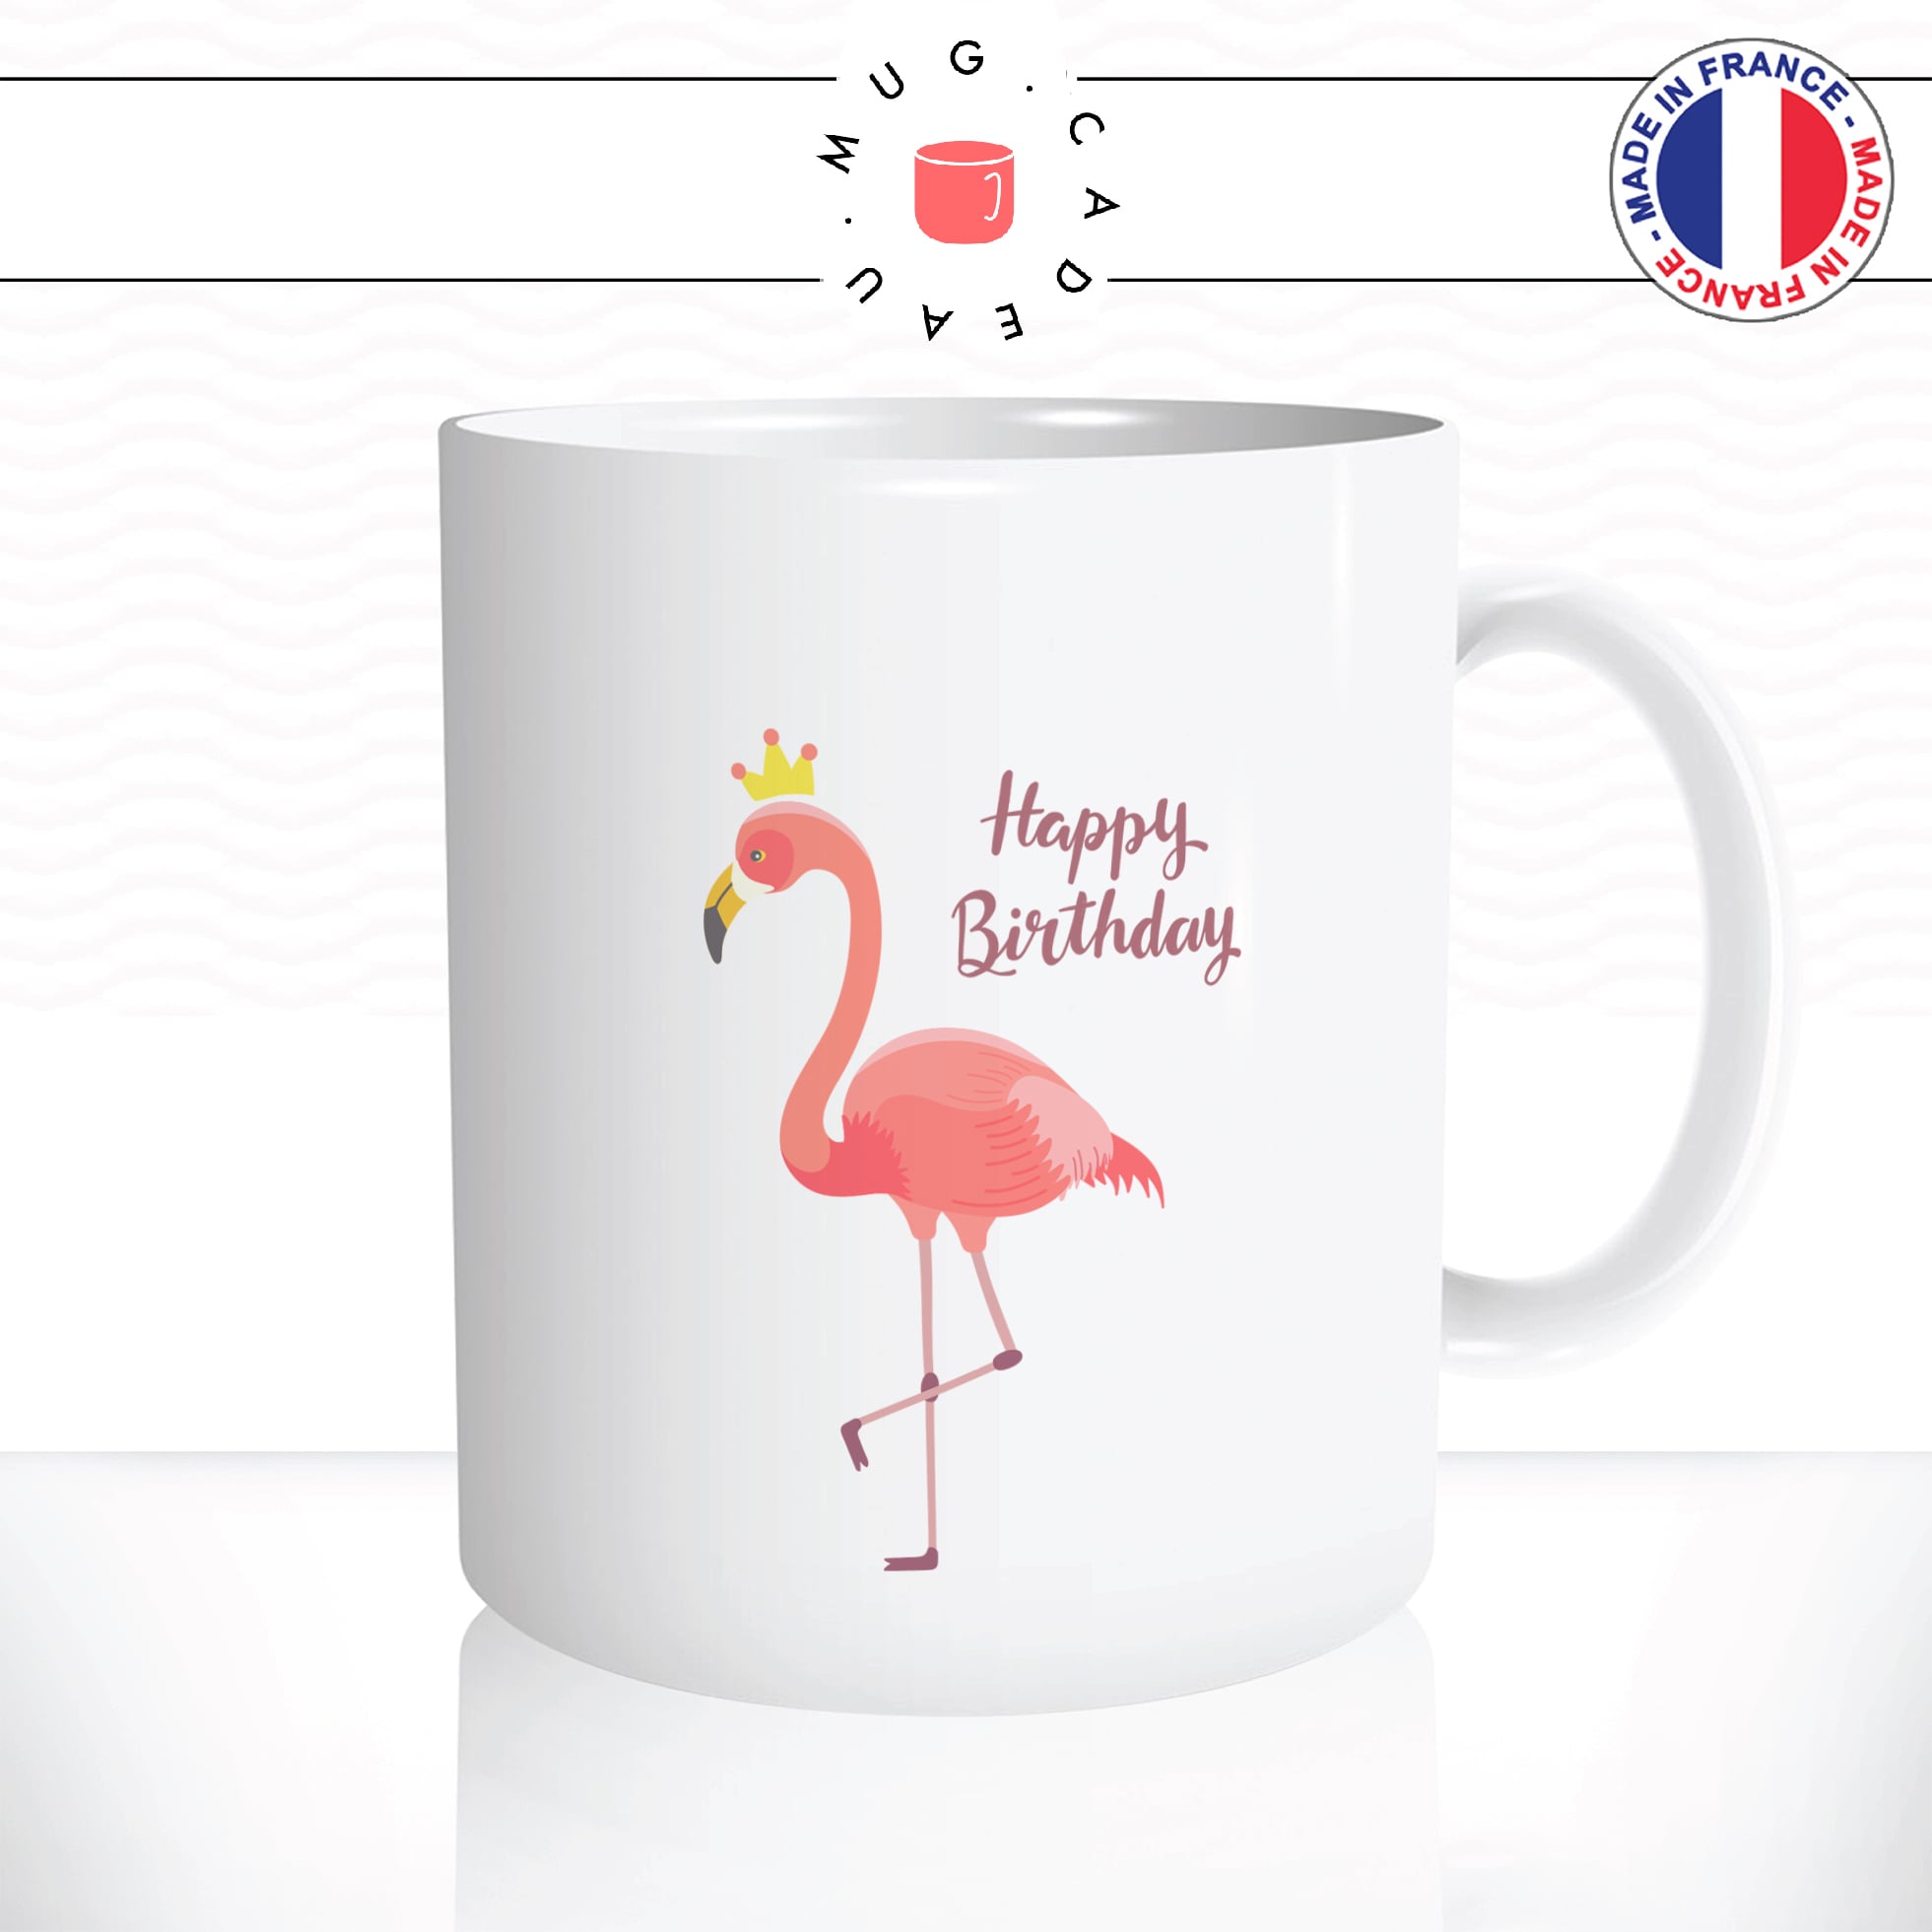 mug-tasse-flamant-rose-happy-birthday-anniversaire-fun-cool-cafe-the-idée-cadeau-personnalisé-original